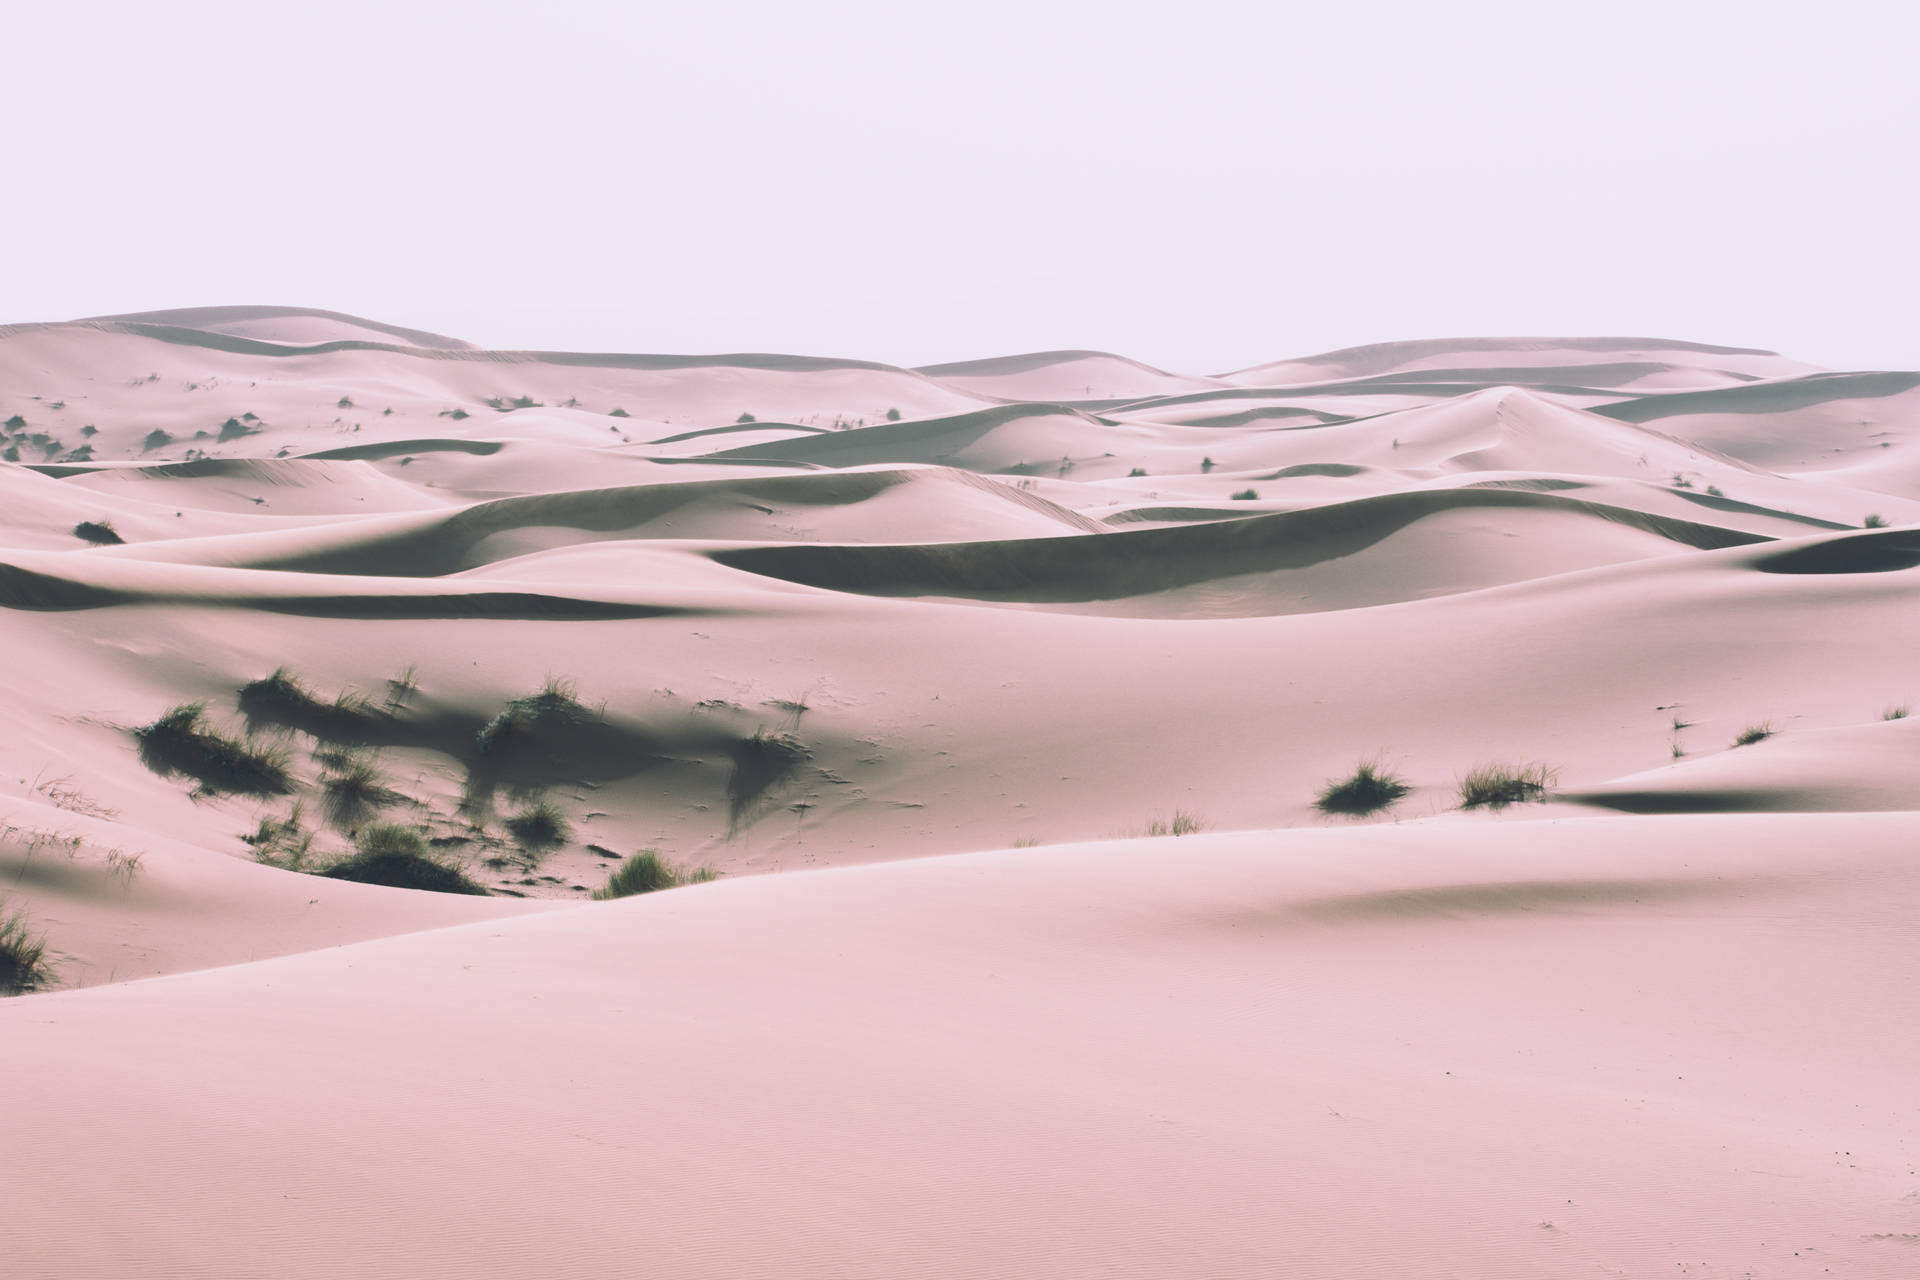 Sahara Desert Land Form